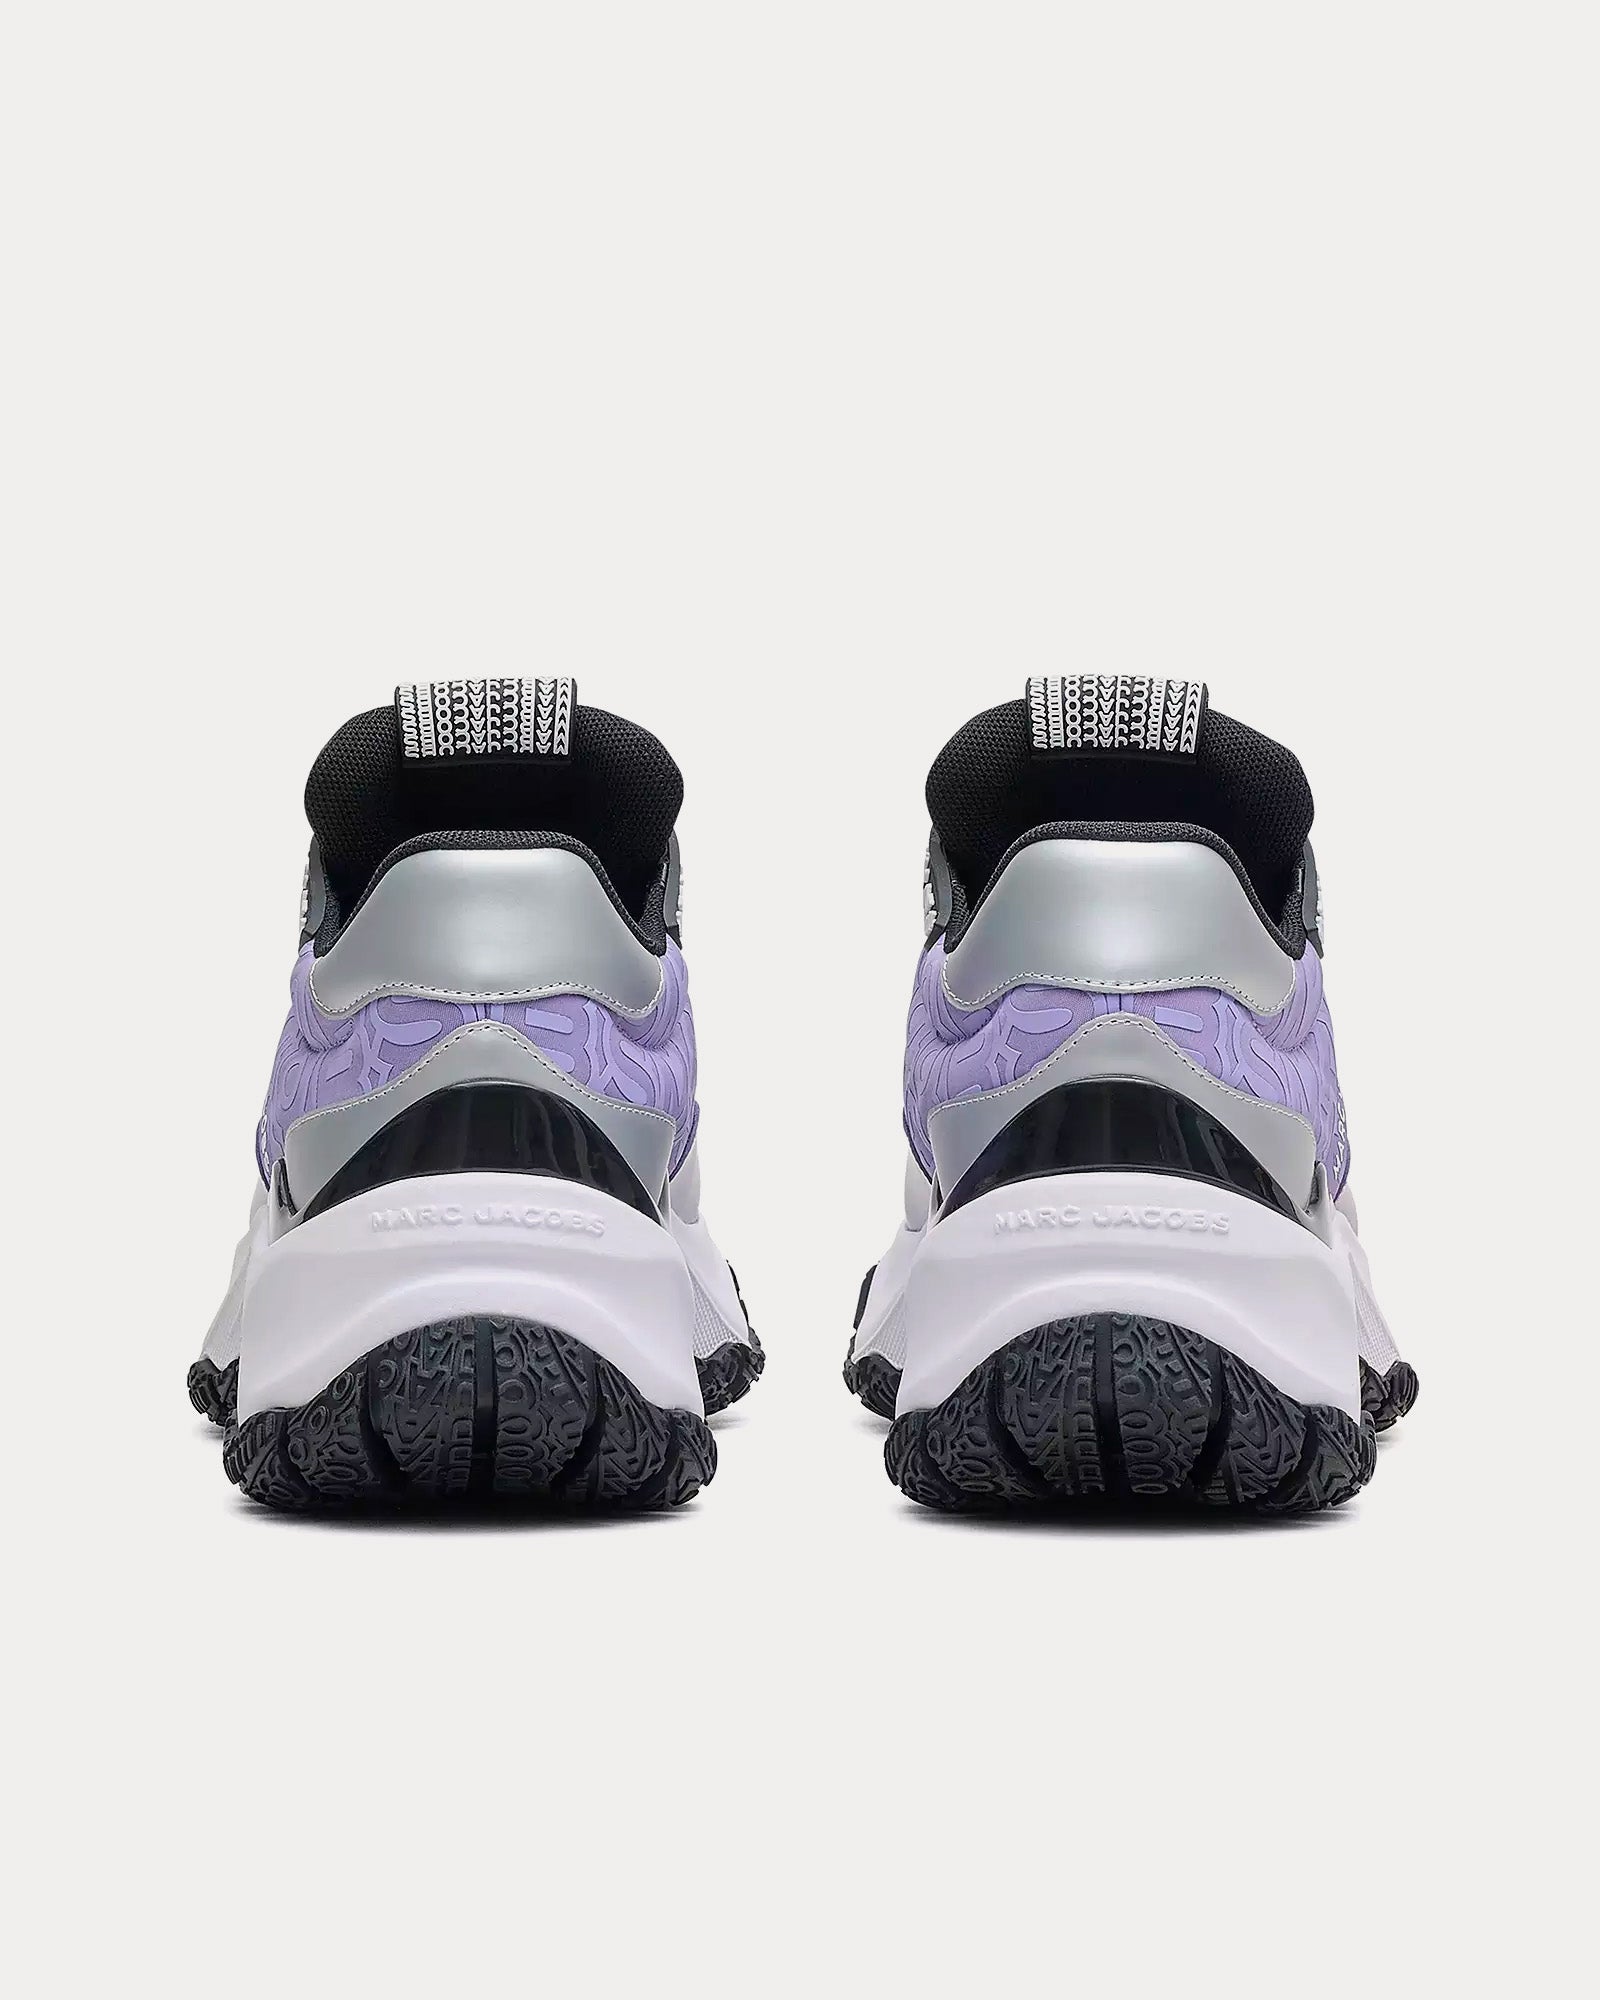 Marc Jacobs - The Monogram Lazy Runner Purple / Multi Low Top Sneakers